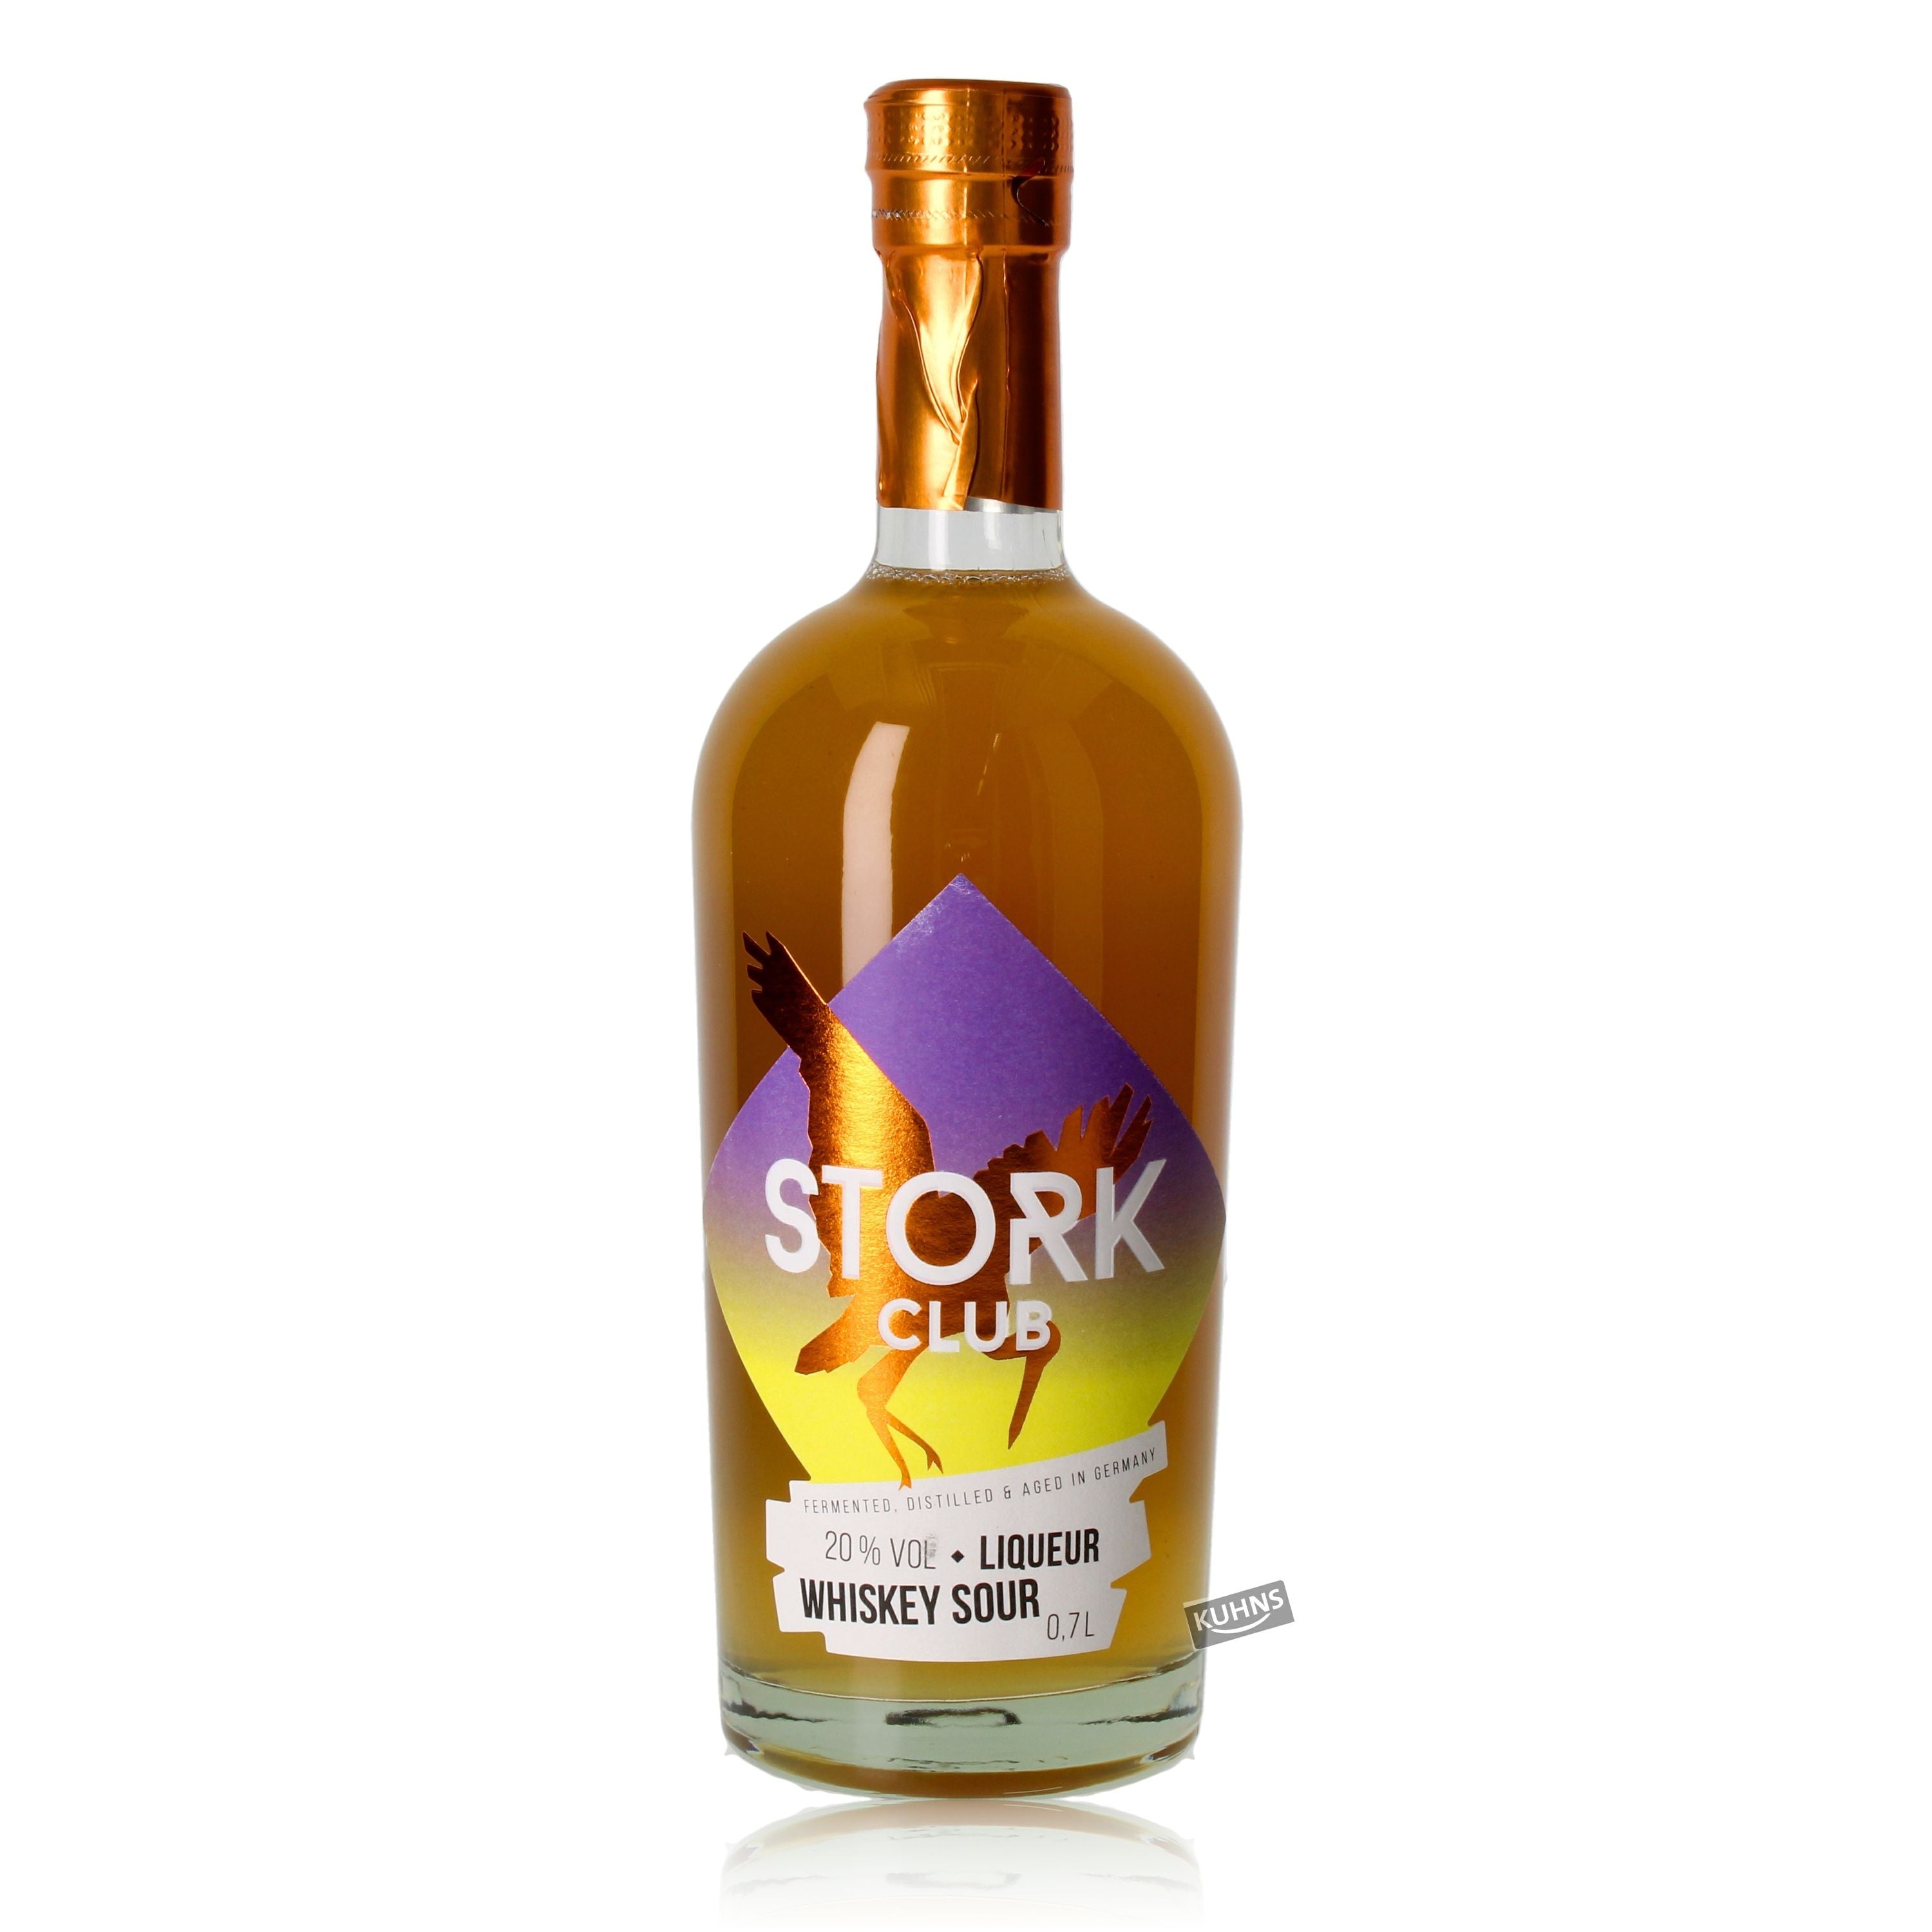 Stork Club Whiskey Sour 0.7l, alc. 20% by volume 